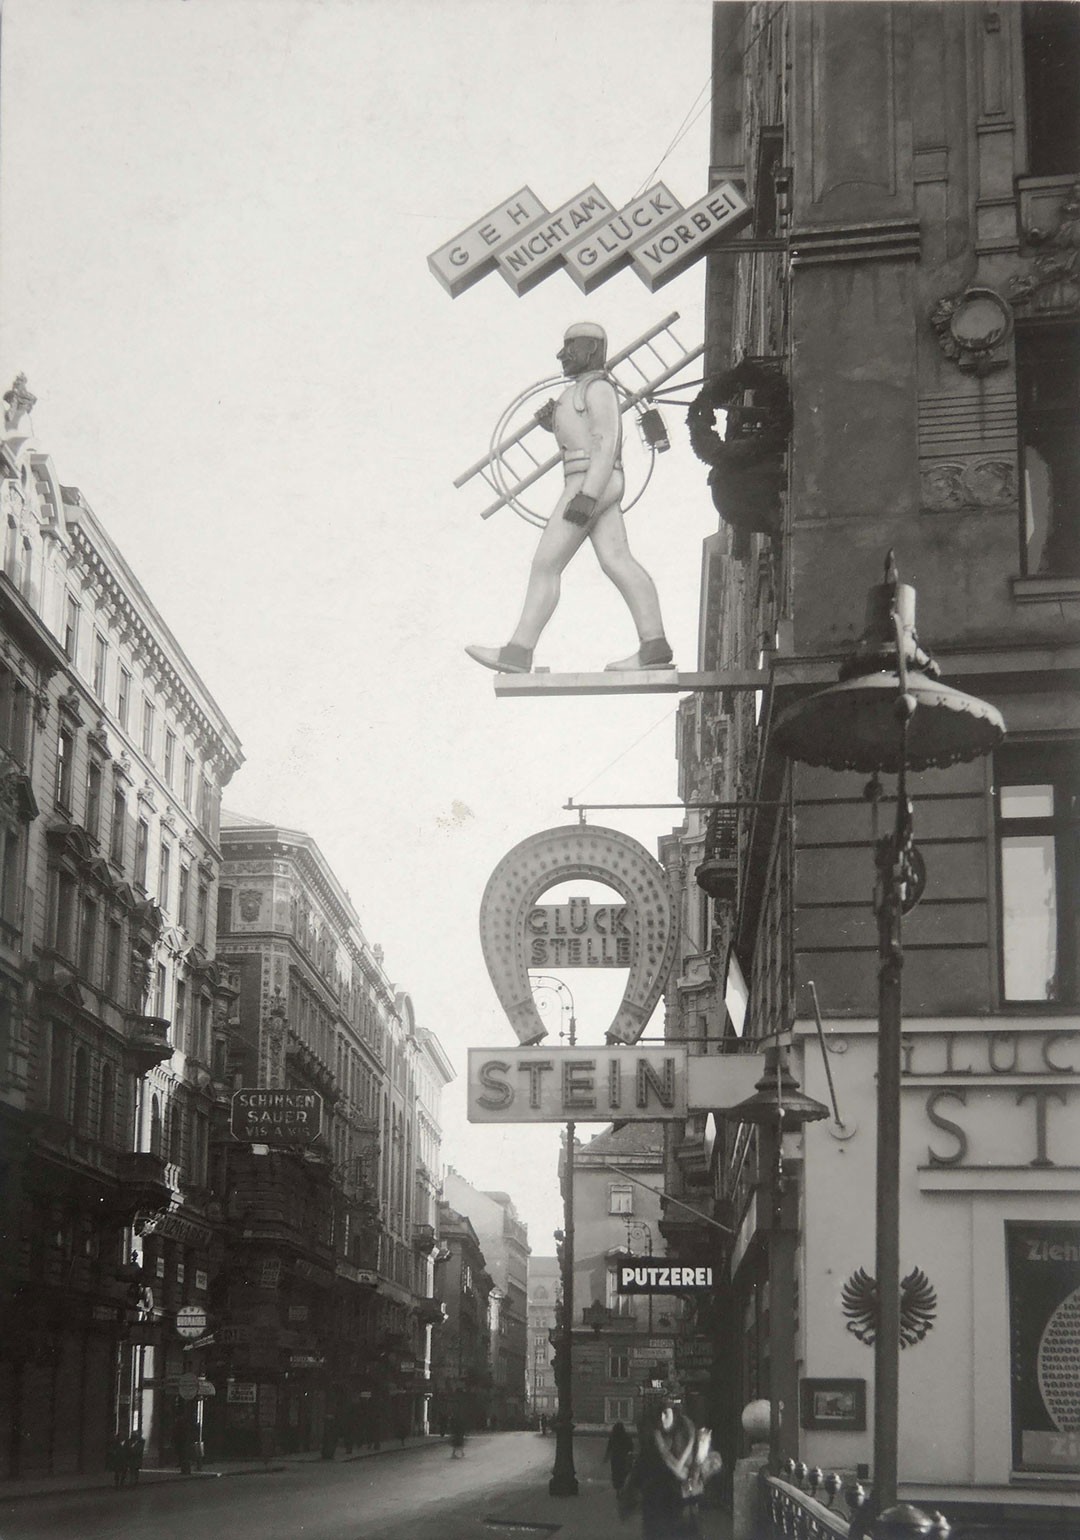 <BODY><div>Werkstätte Hagenauer, company sign “Glücksstelle Stein,” 1930s </div><div>Contemporary photograph</div><div>© MAK</div></BODY>